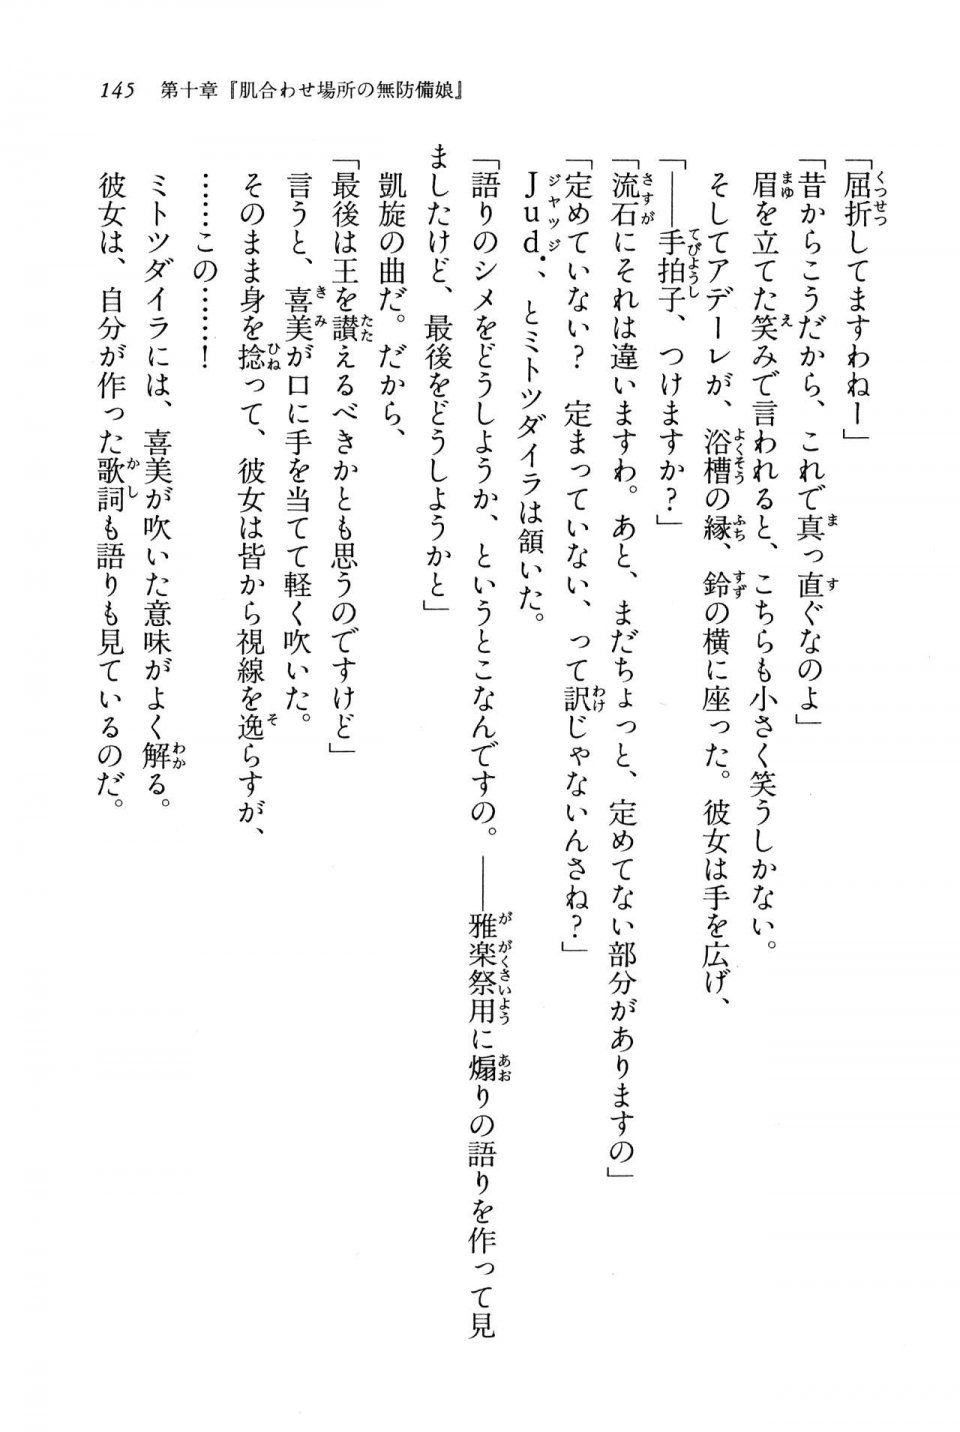 Kyoukai Senjou no Horizon BD Special Mininovel Vol 8(4B) - Photo #149